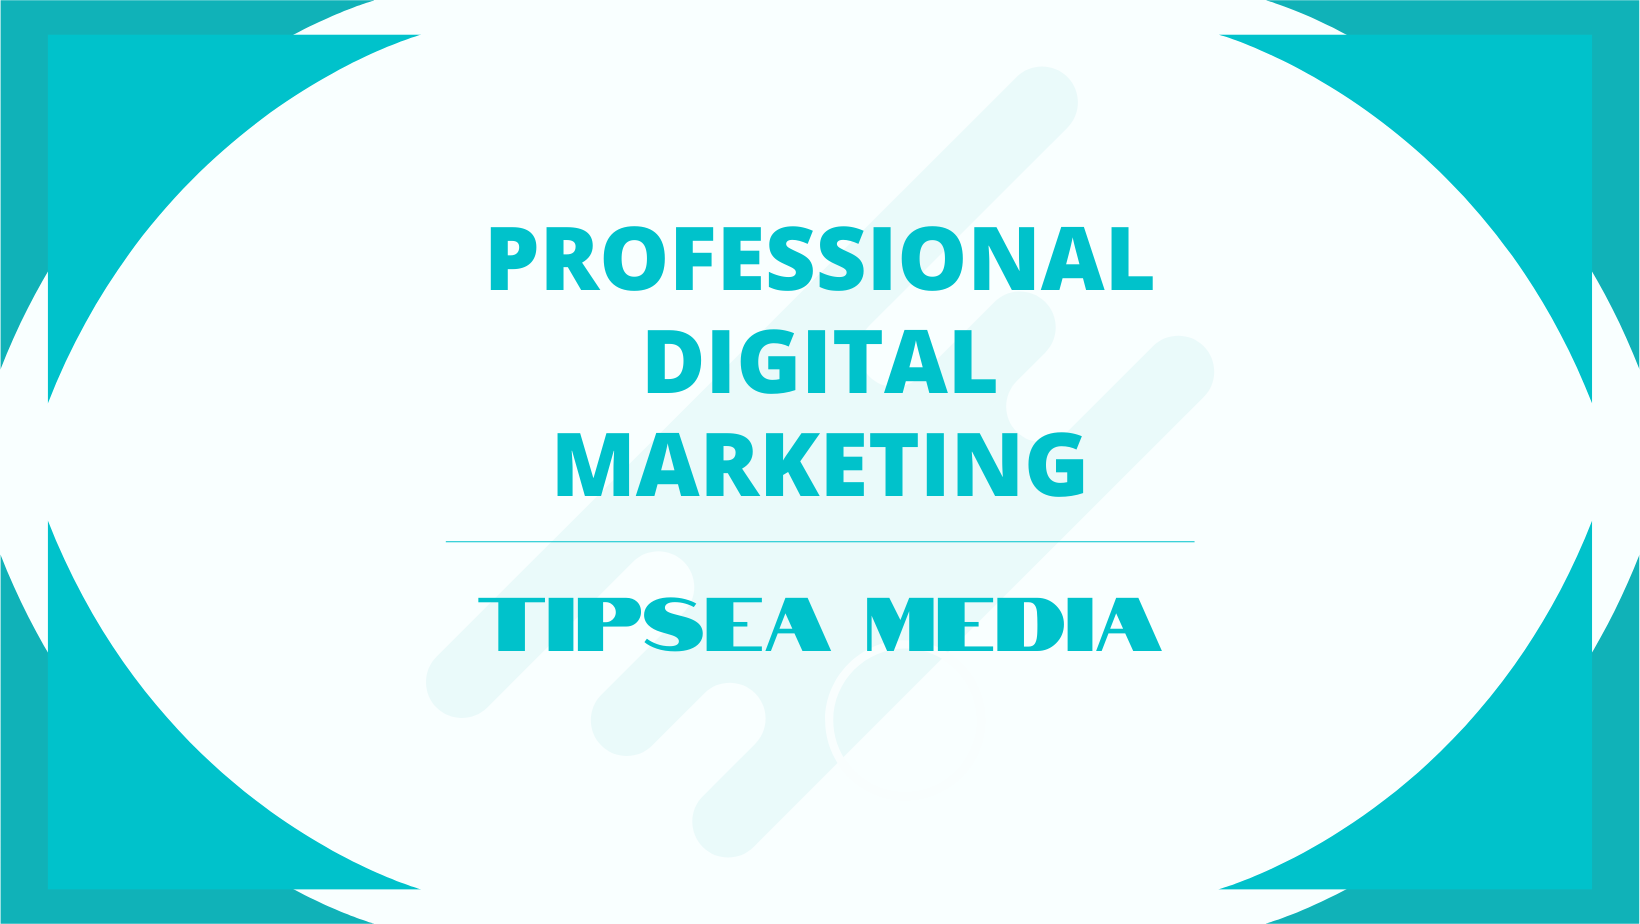 Tipsea Media